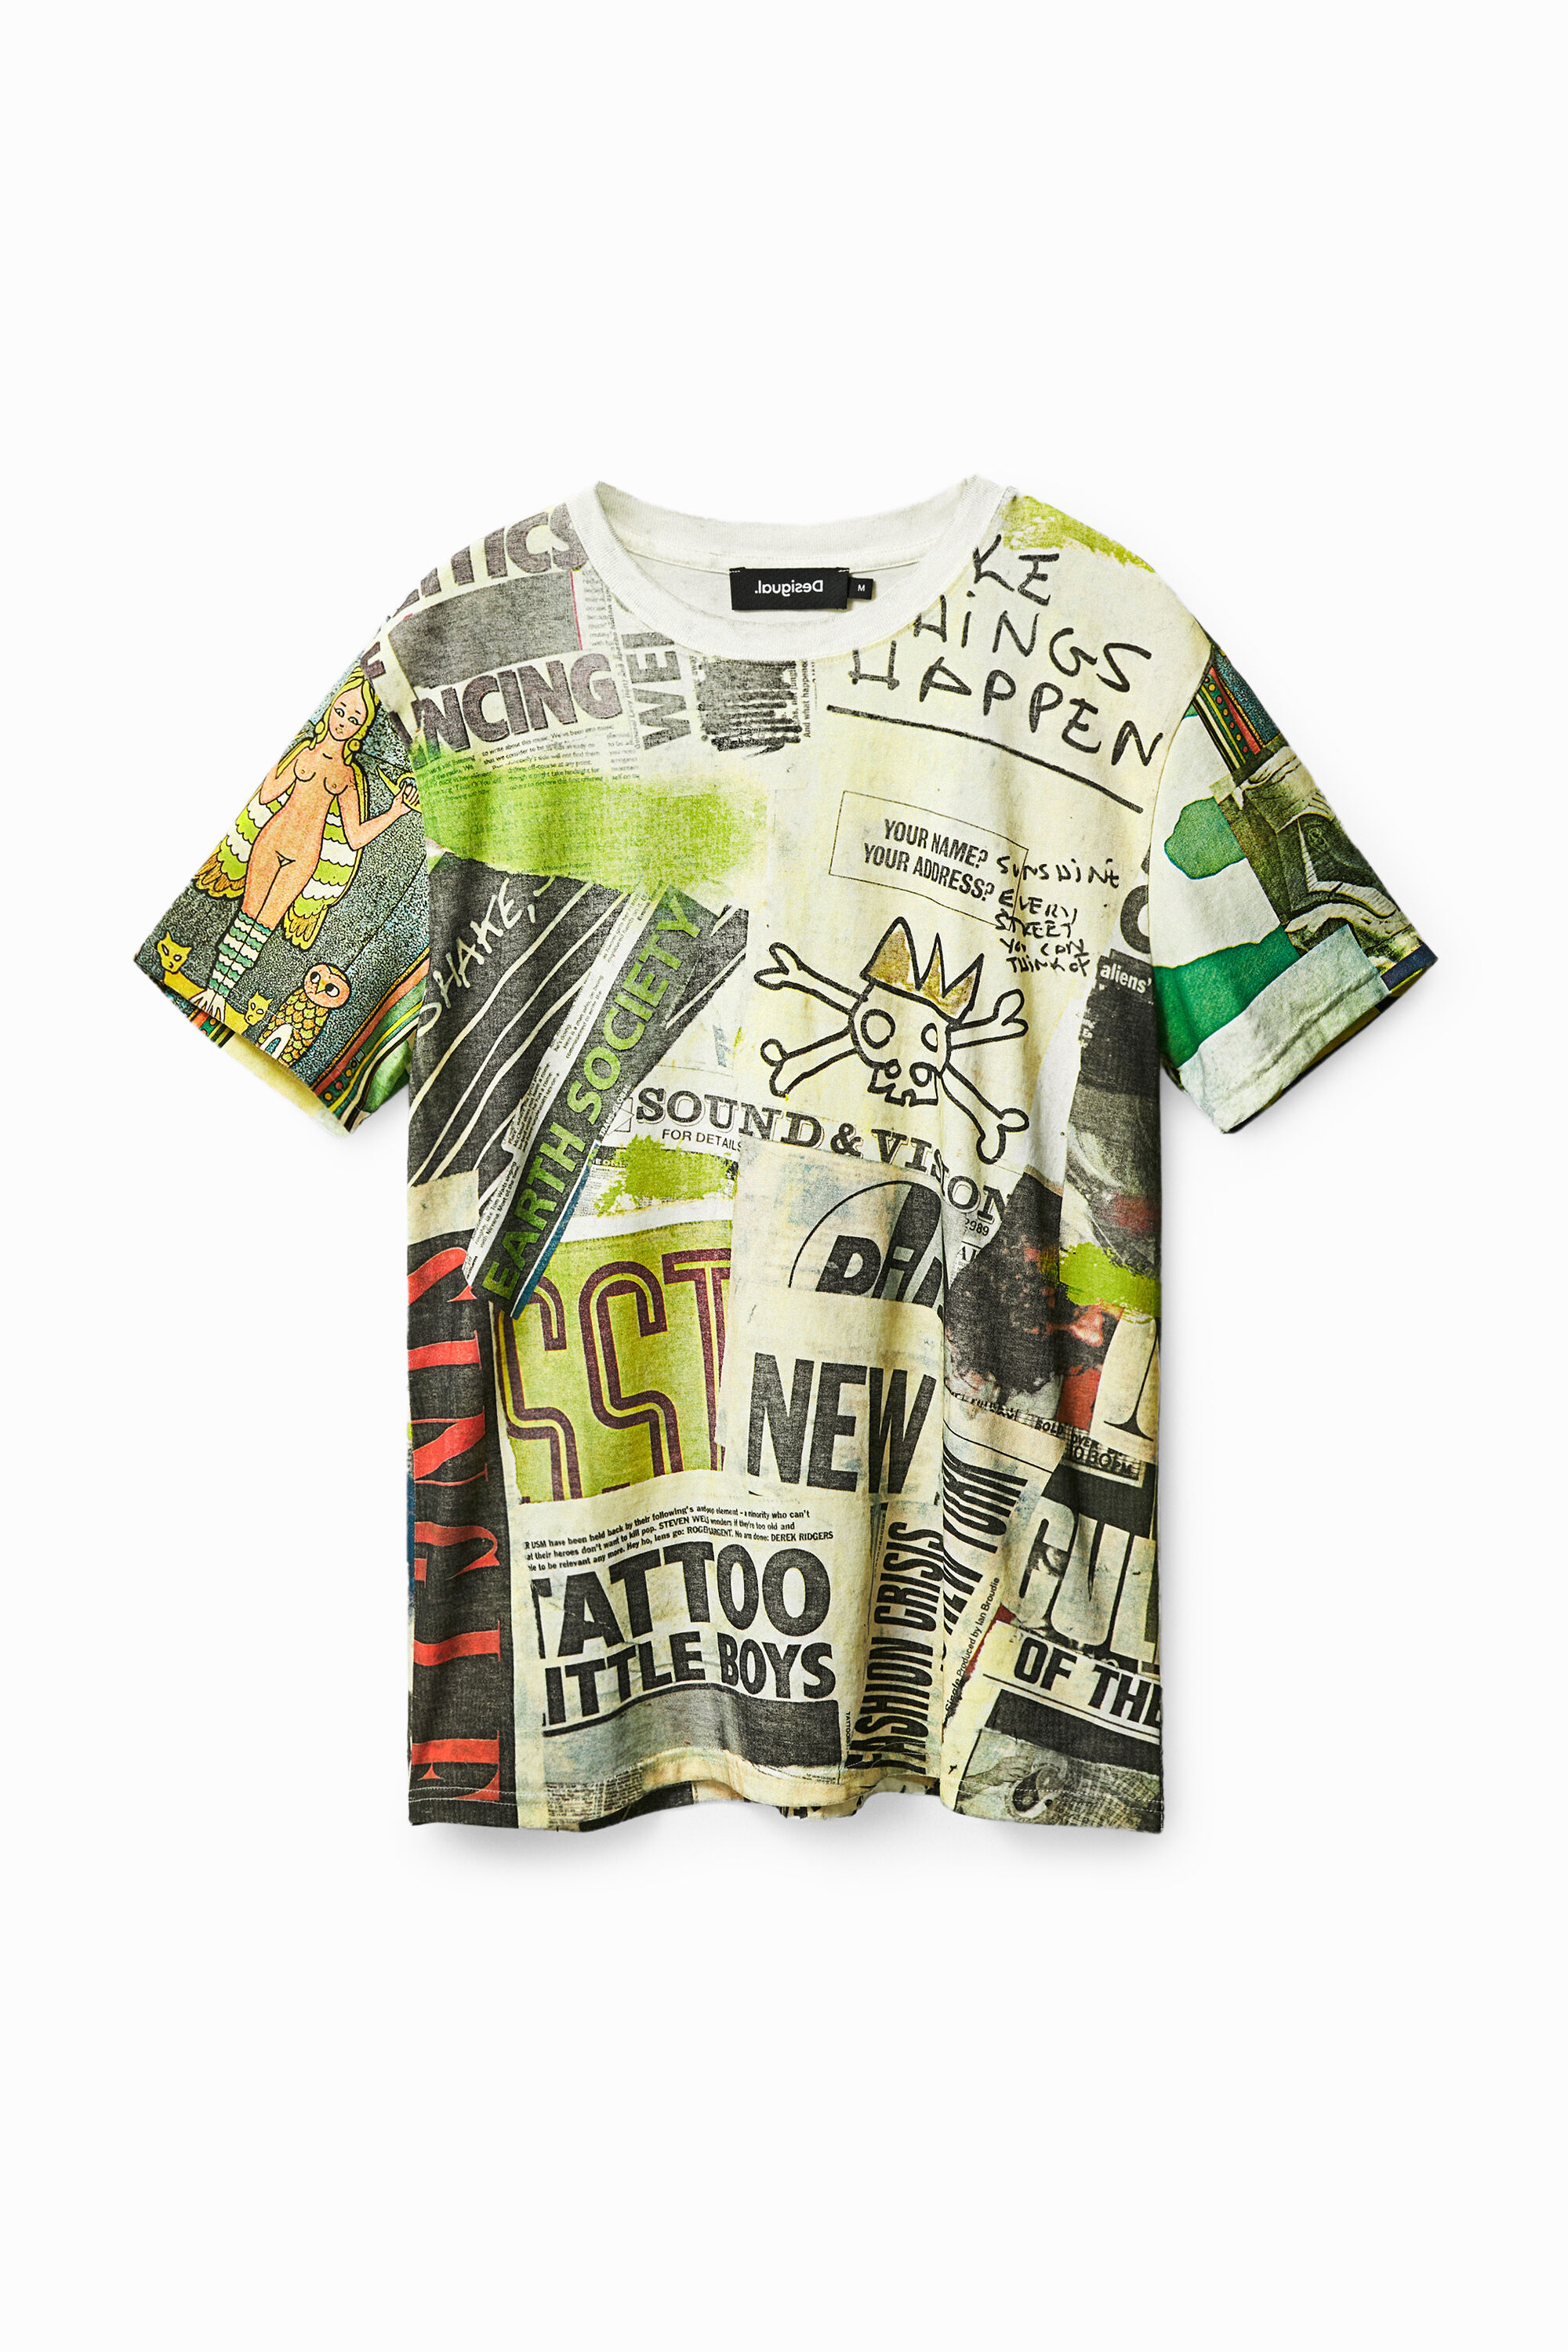 Jack & Jones Mens T shirt Printed Short Sleeves 100% Cotton Summer Tee Shirt Top 